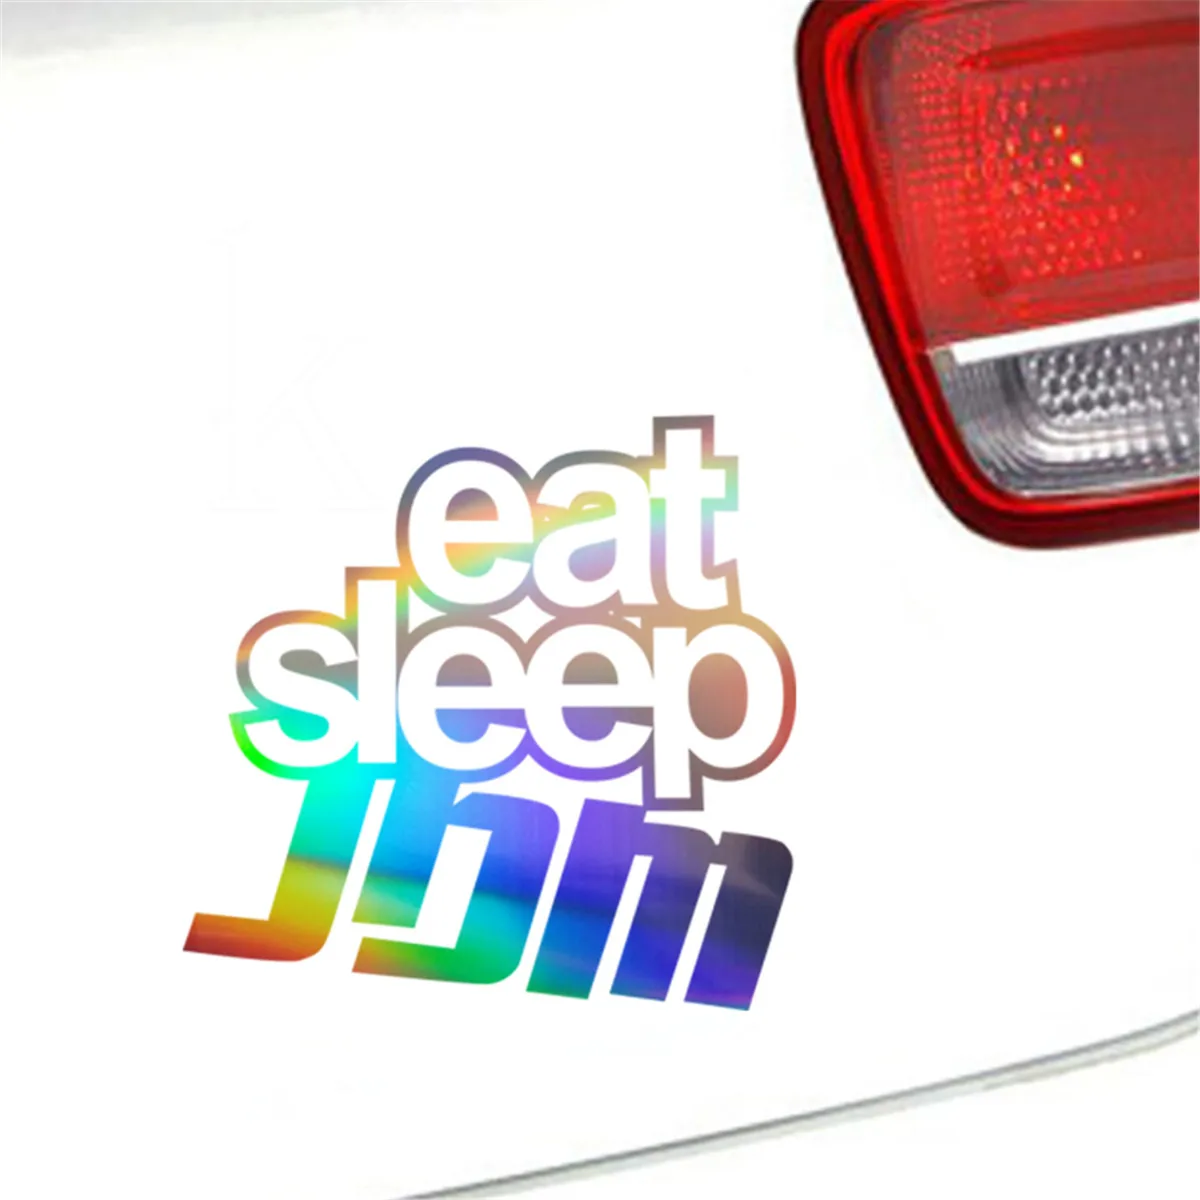 eat sleep jdm meaning